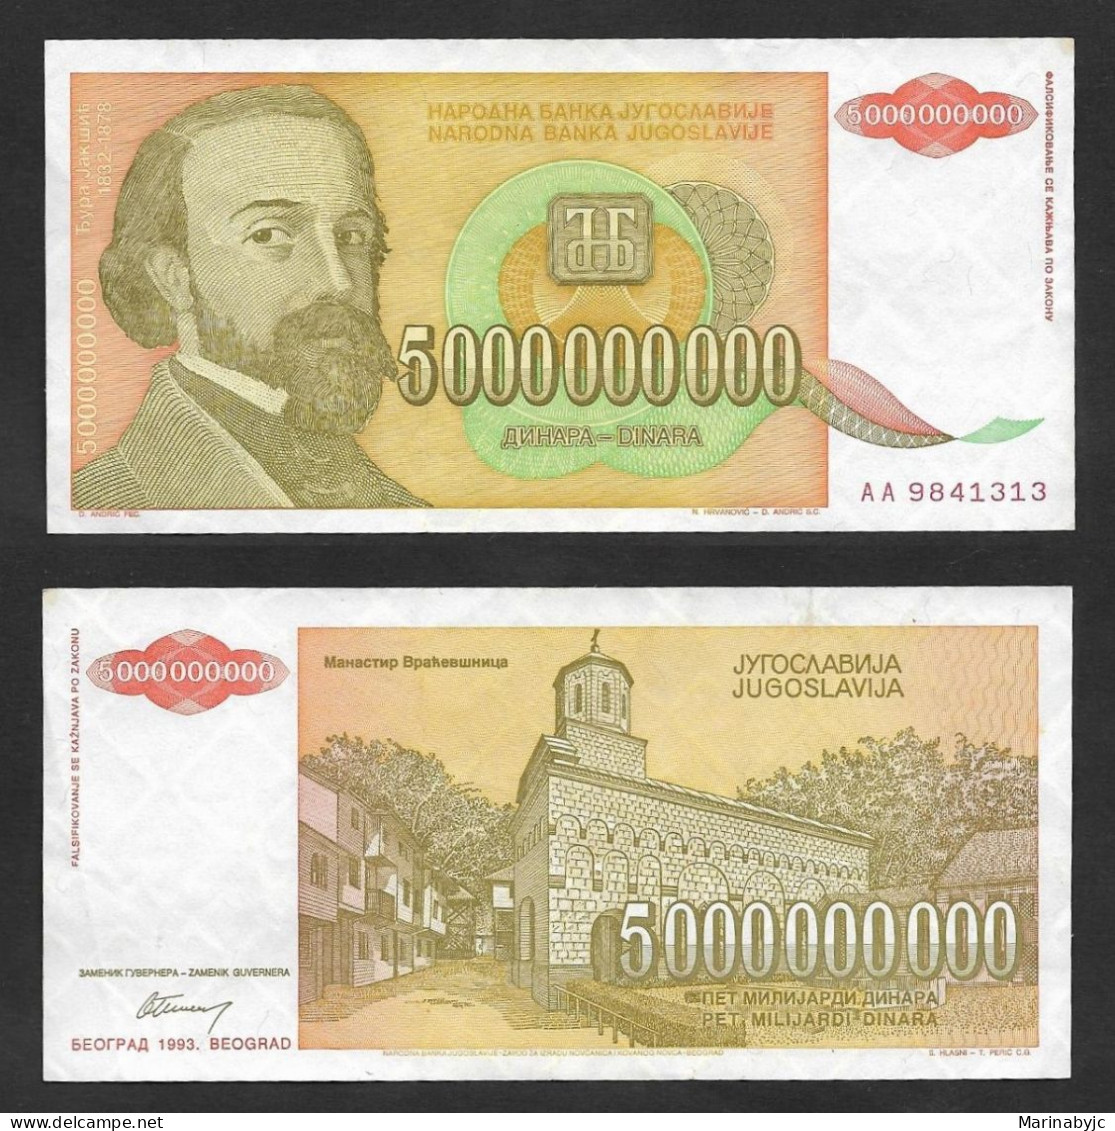 SE)1993 YUGOSLAVIA, BANKNOTE OF 5,00,000,000 DINARS OF THE CENTRAL BANK OF YUGOSLAVIA, WITH REVERSE, VF - Usati